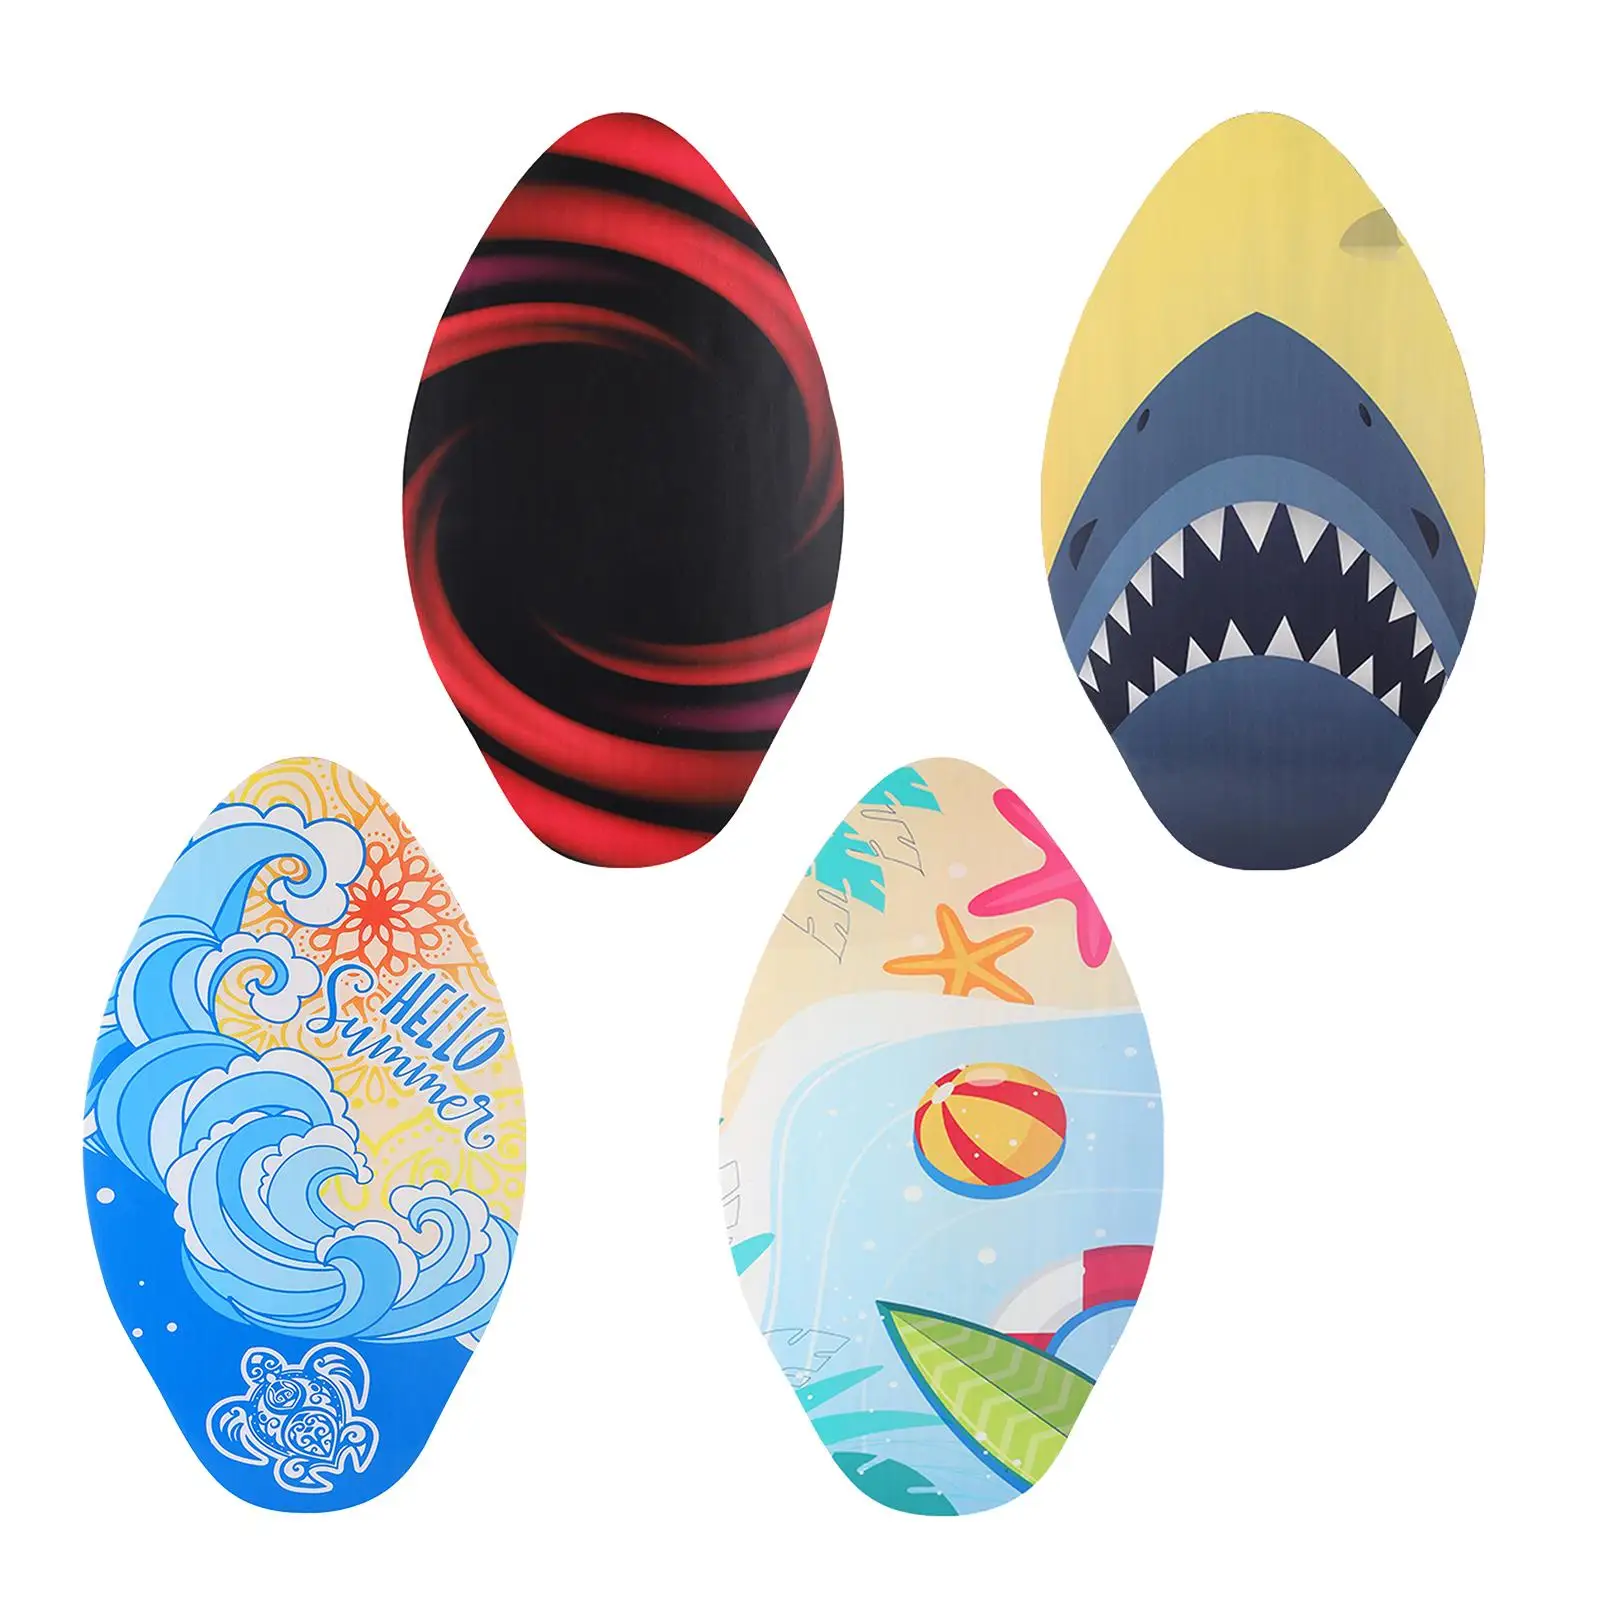 30inch Skimboard Surf Board , Wooden Skim Board, Beach Sand Board for Children Teenagers Adults Boy Girls Water Sports